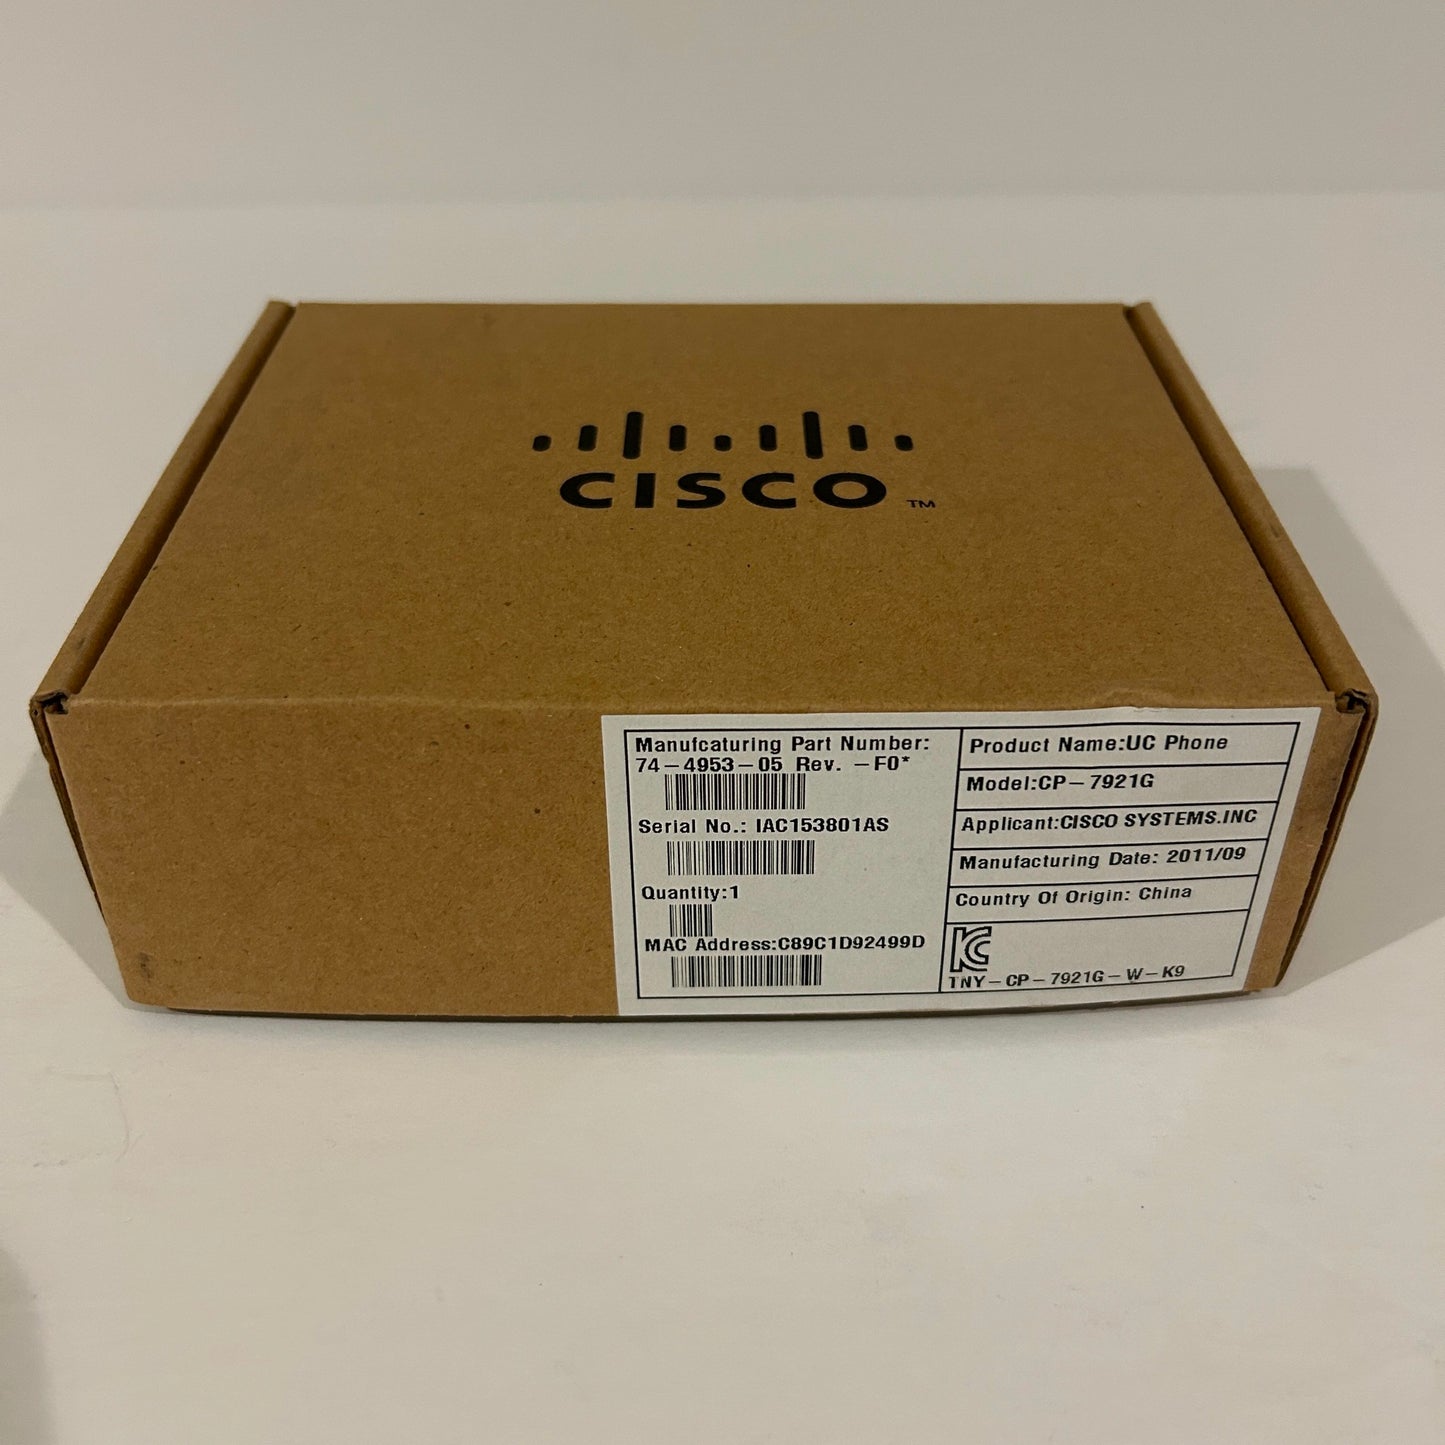 Cisco 7921G VoiP Phone - CP-7921G